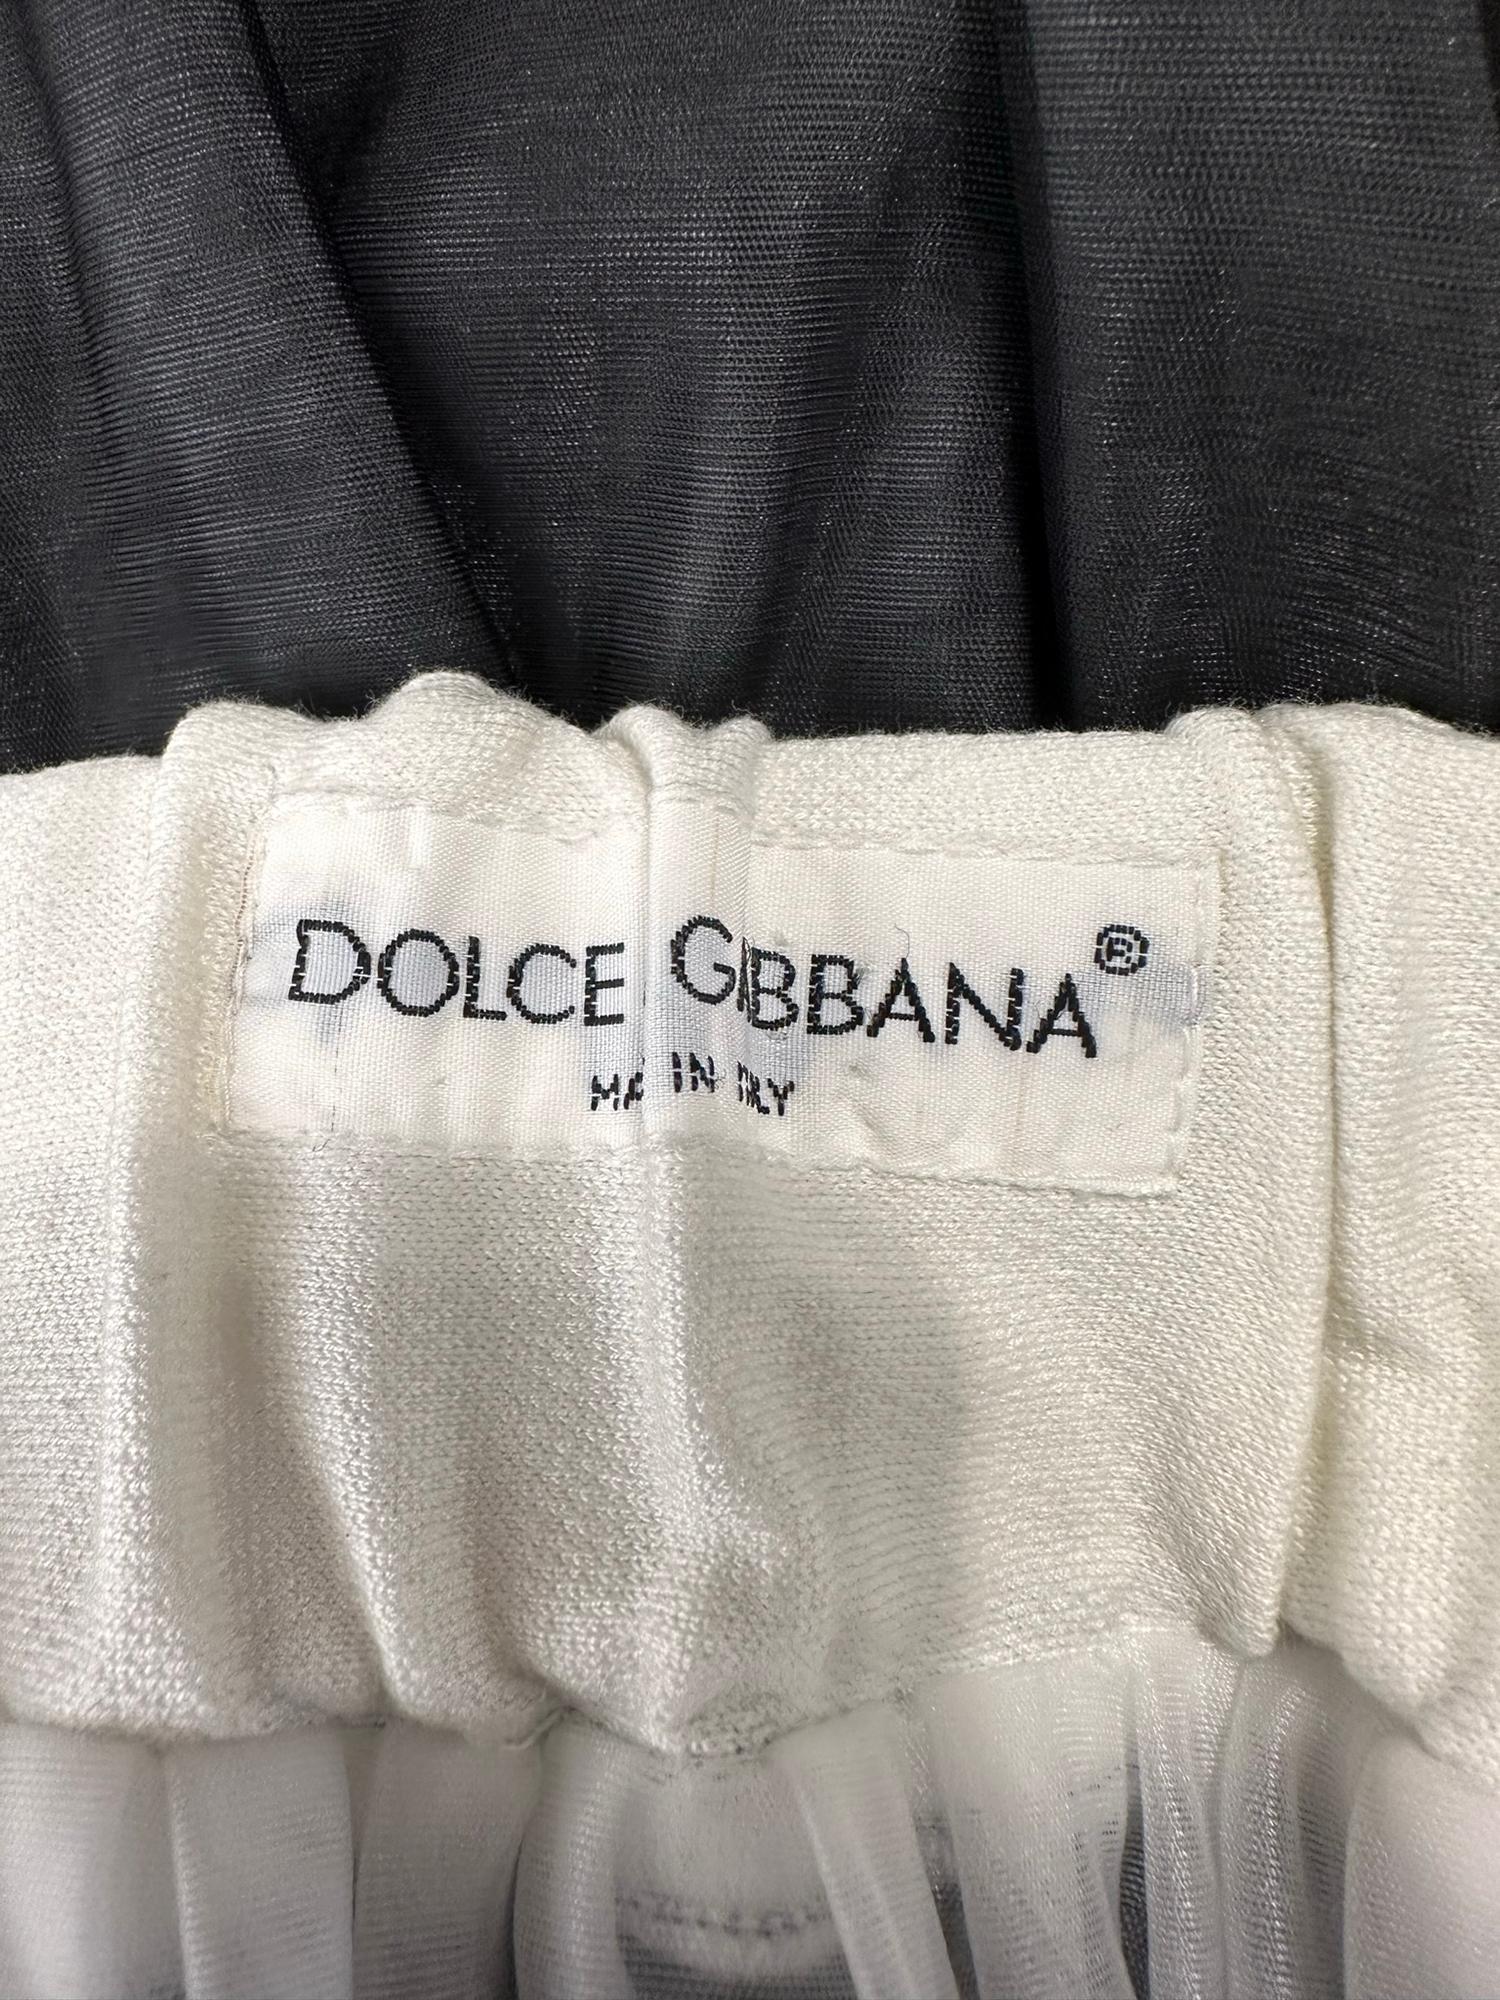 Dolce & Gabbana Sheer Black & White Nylon Athleisure Over size Top & Maxi Skirt  en vente 9